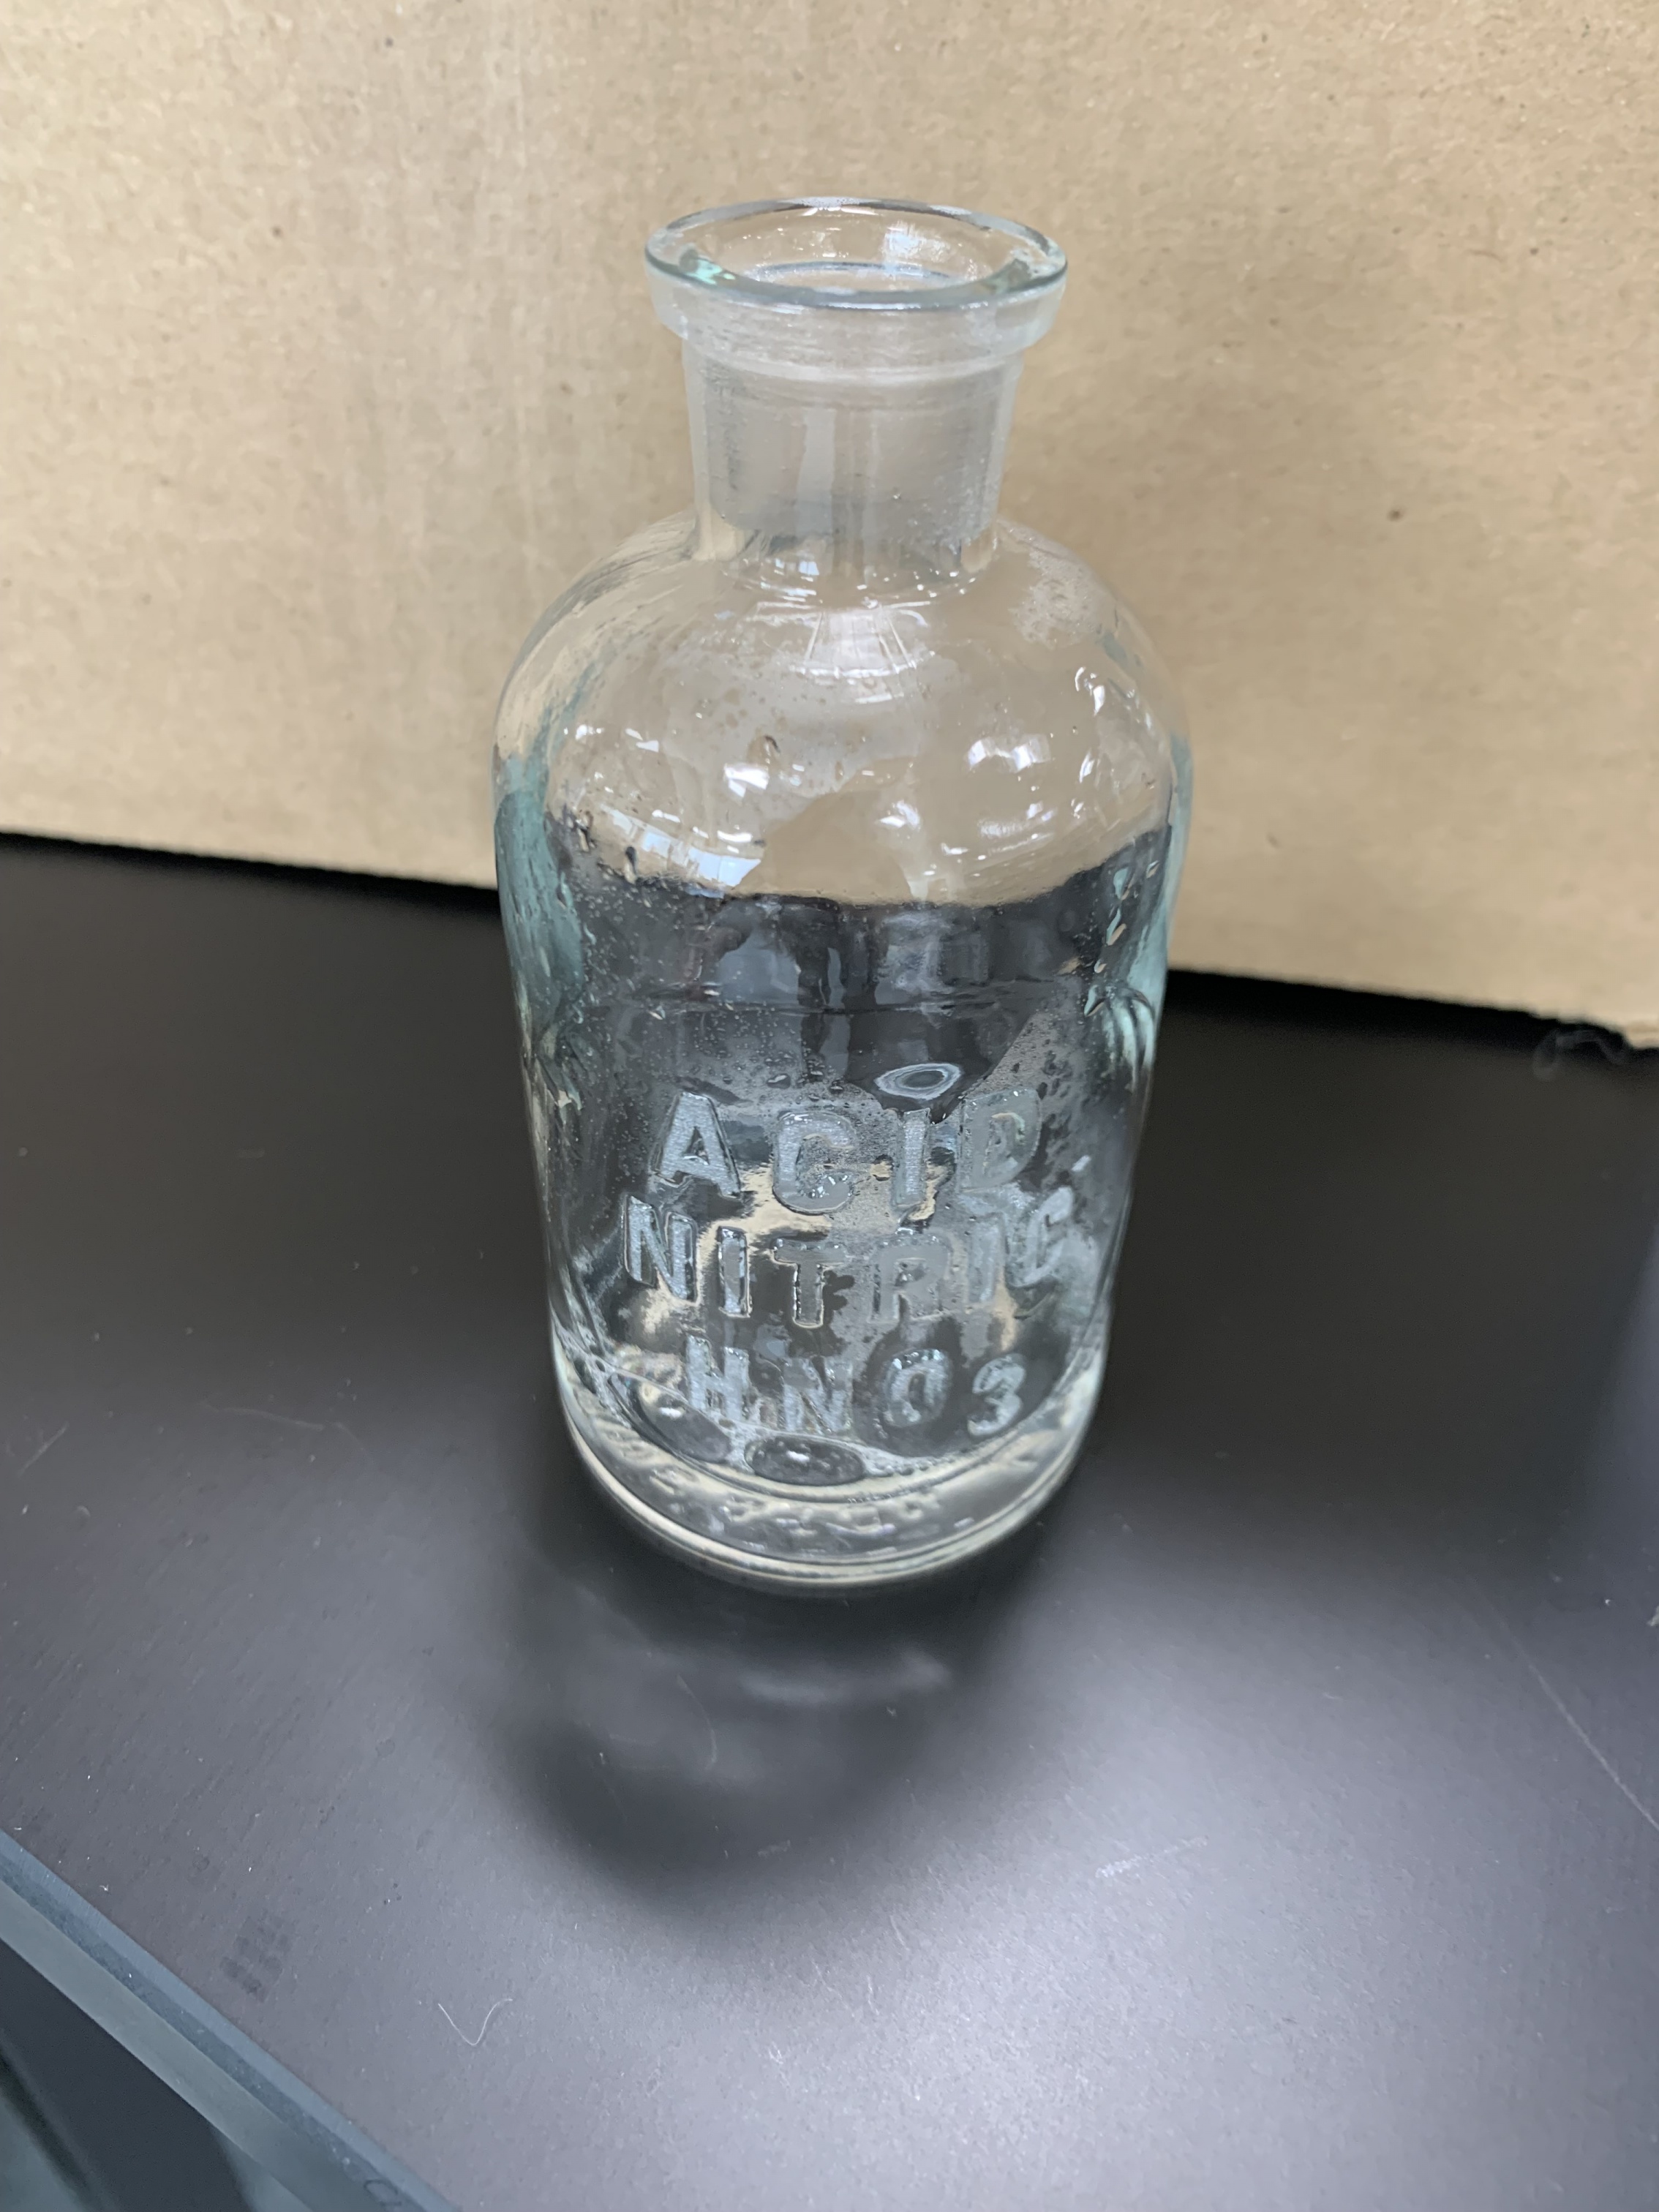 Old Chemical Bottles Found - Value? — Historic Glasshouse forum